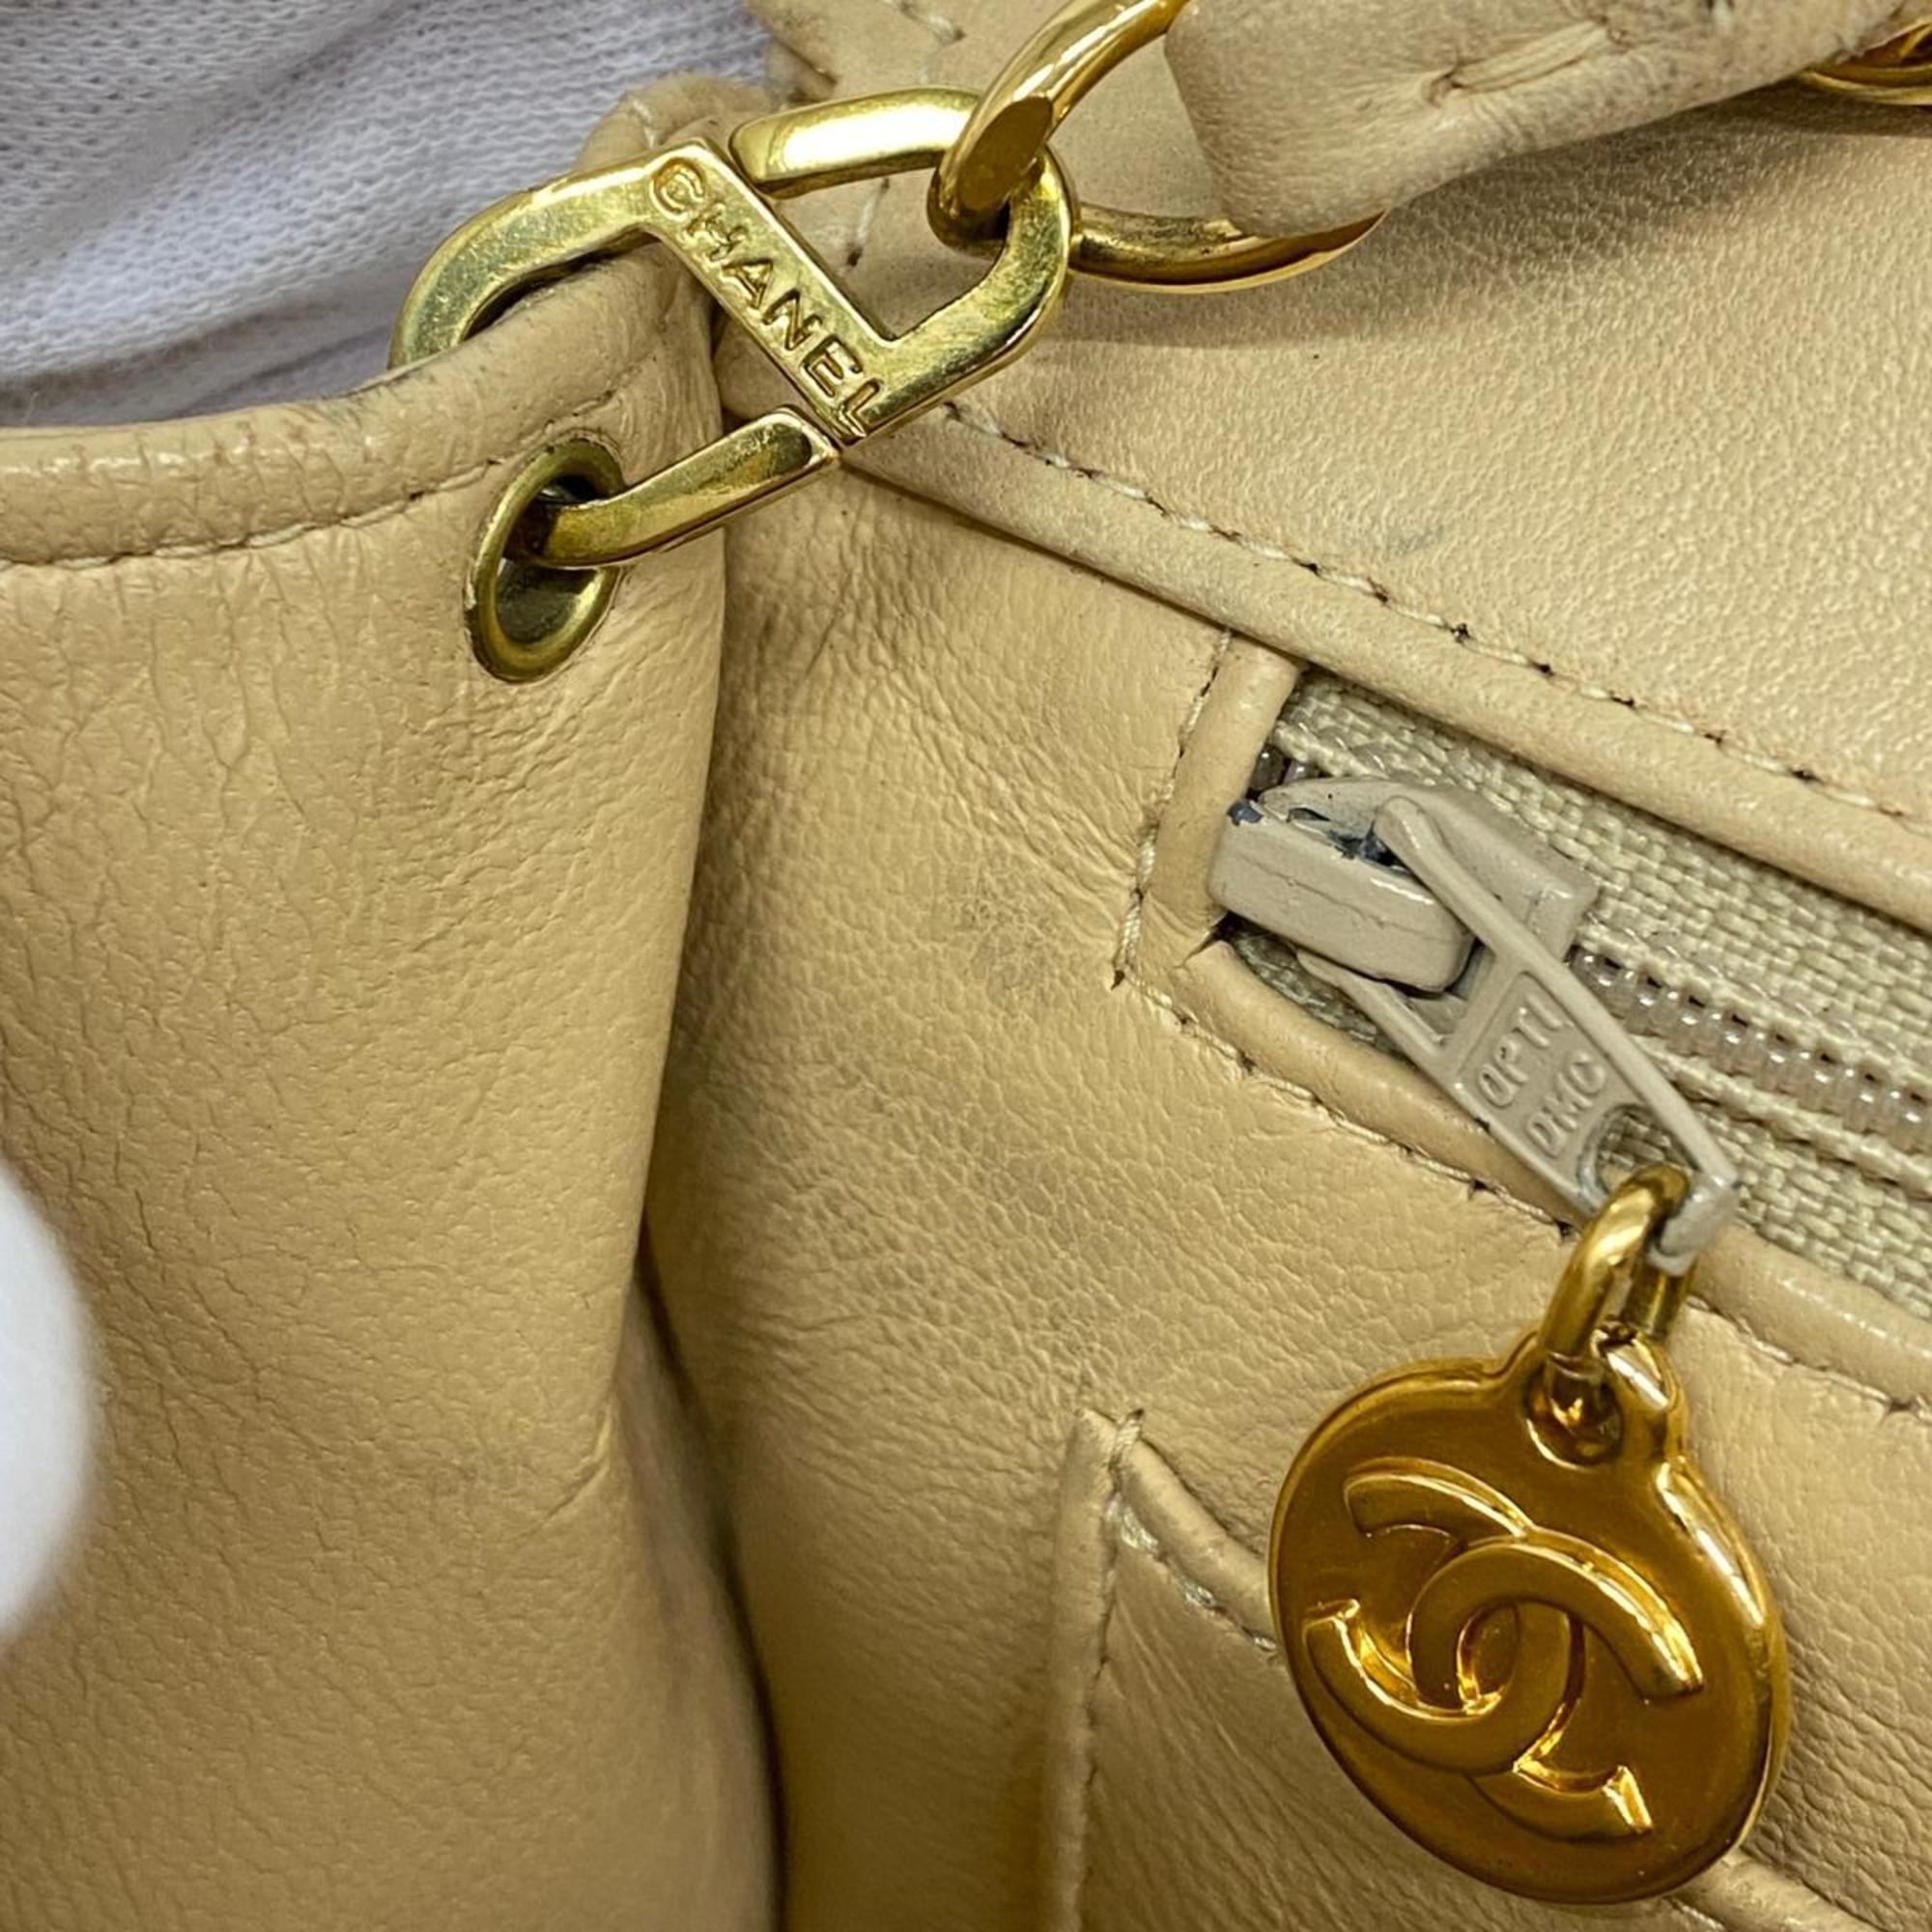 Chanel handbag, matelassé, lambskin, beige, women's